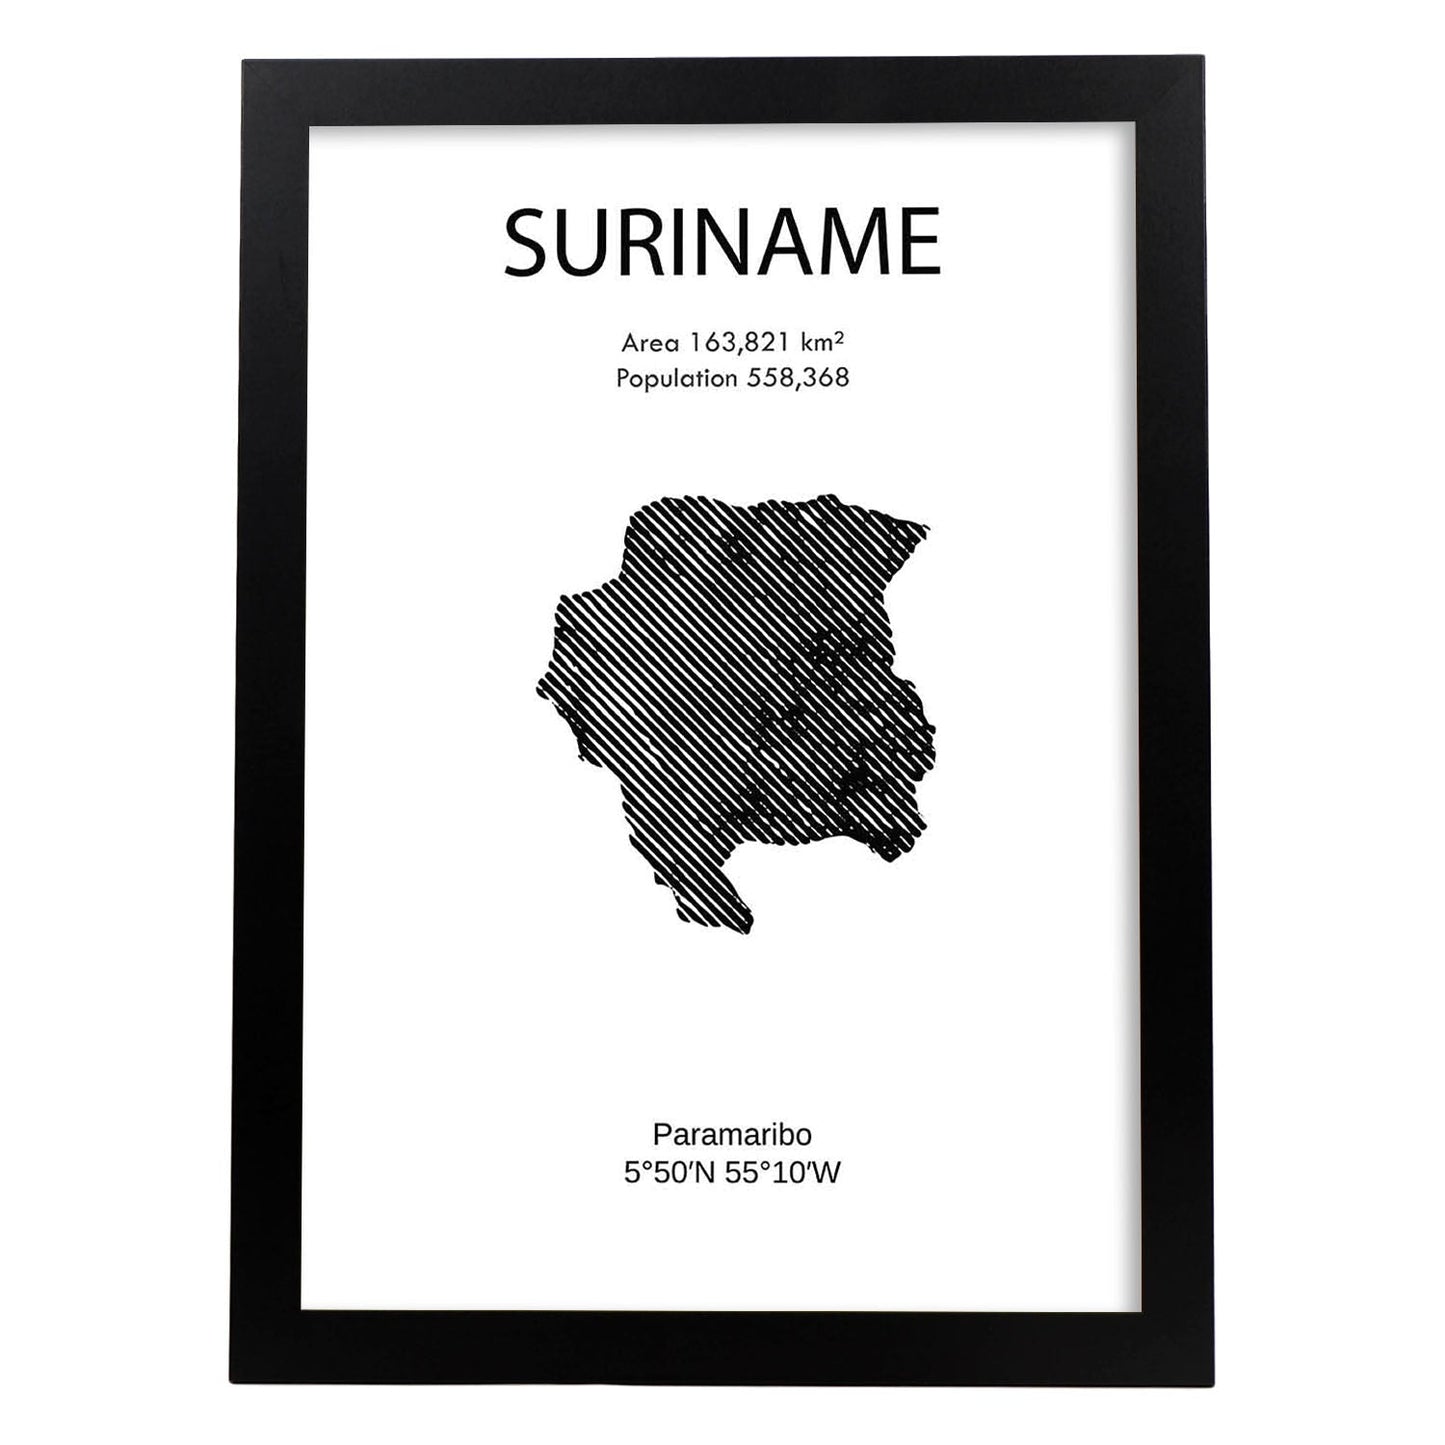 Poster de Surinam. Láminas de paises y continentes del mundo.-Artwork-Nacnic-A3-Marco Negro-Nacnic Estudio SL